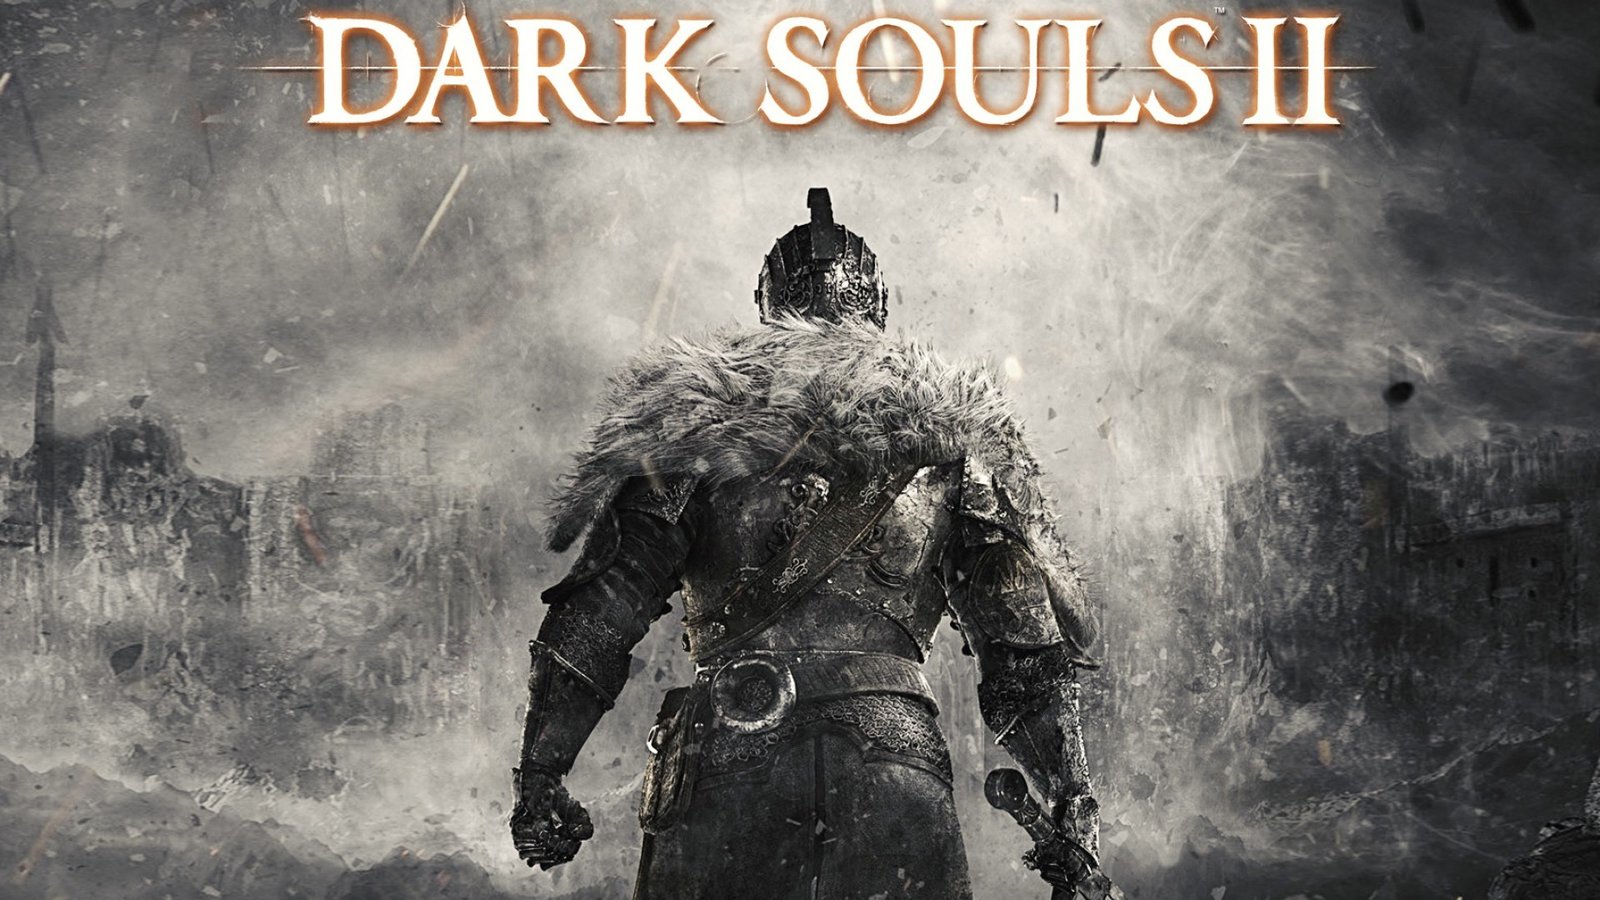 Dark Souls II: Season Pass